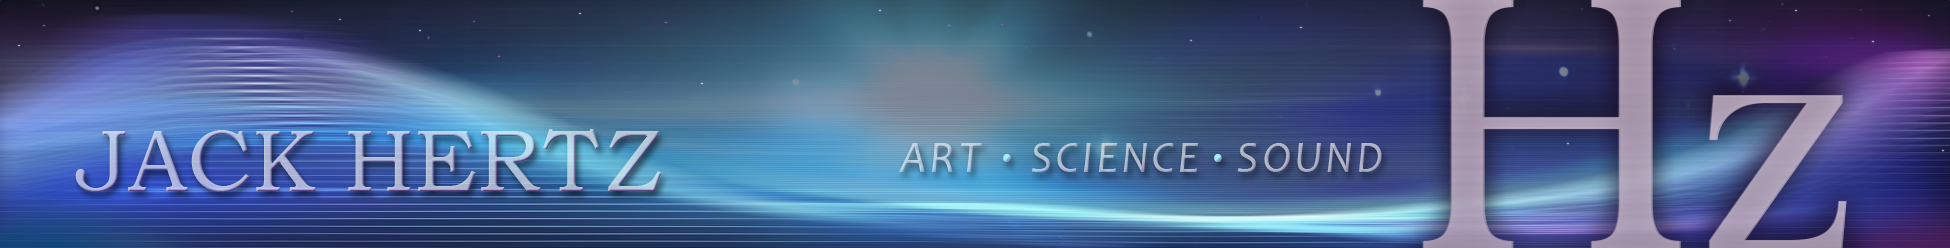 Jack Hertz - Art x Science x Sound = Hz